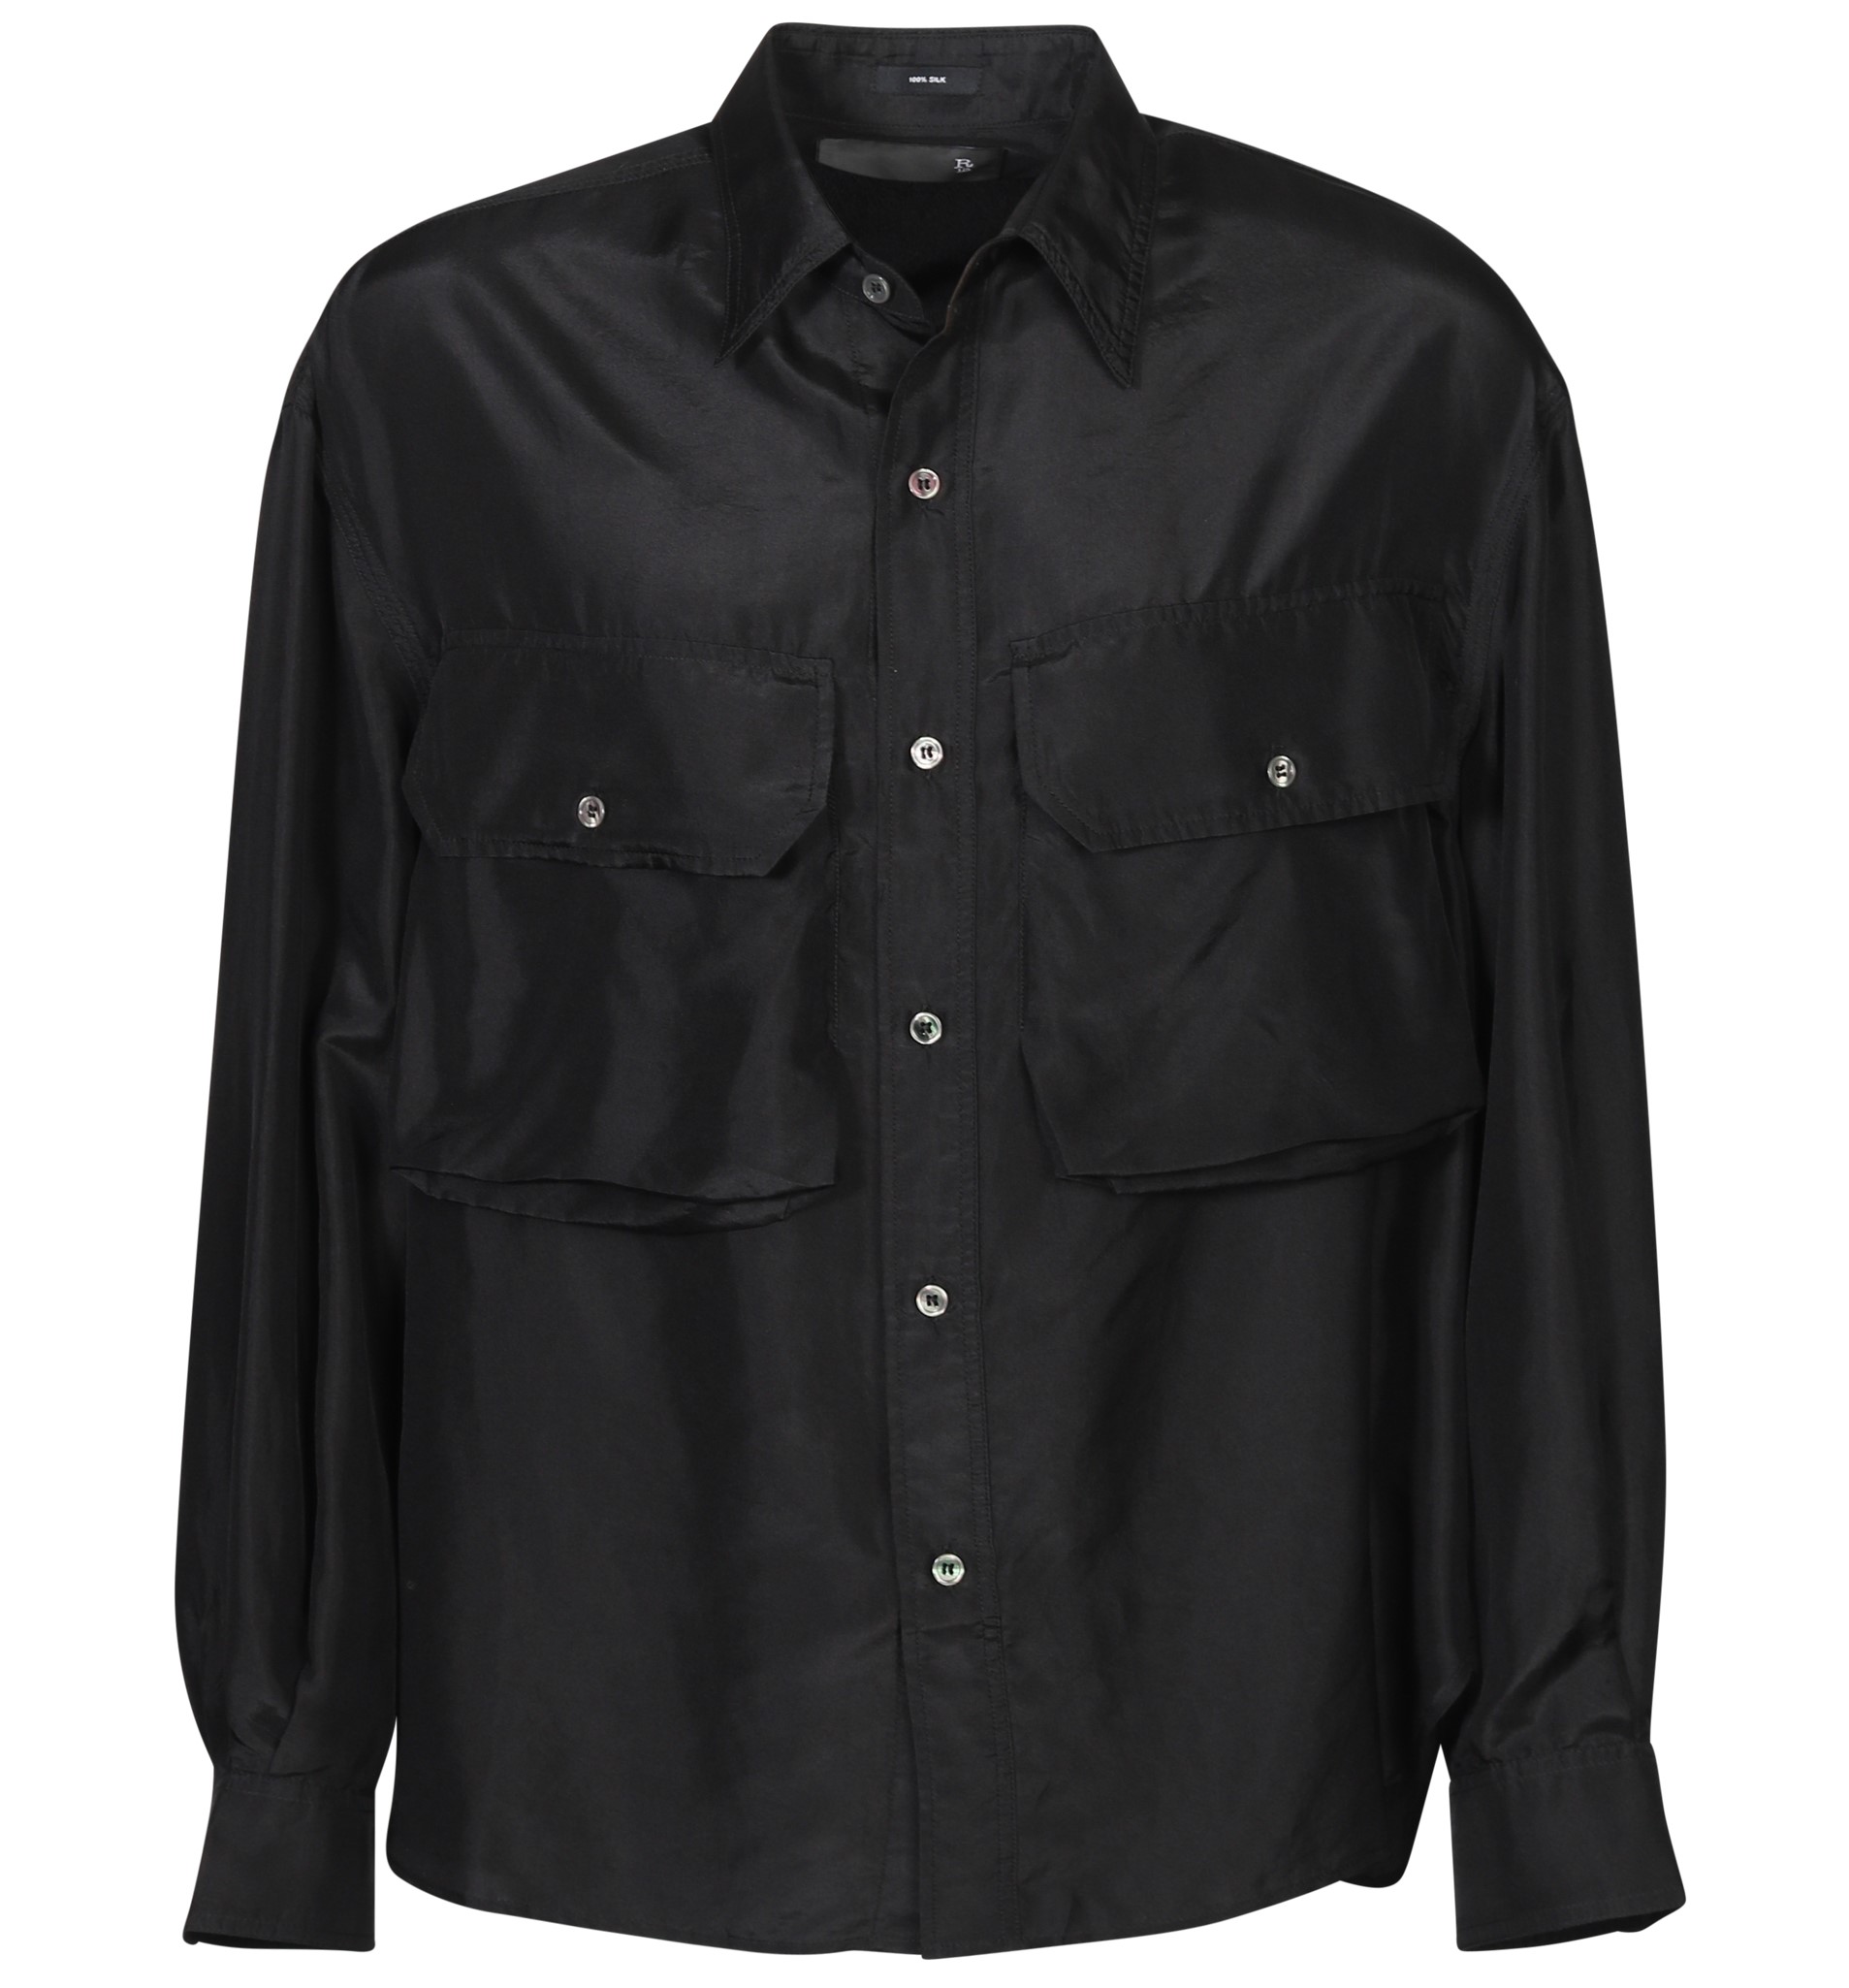 R13 Oversize Pocket Silk Shirt in Overdyed Black S